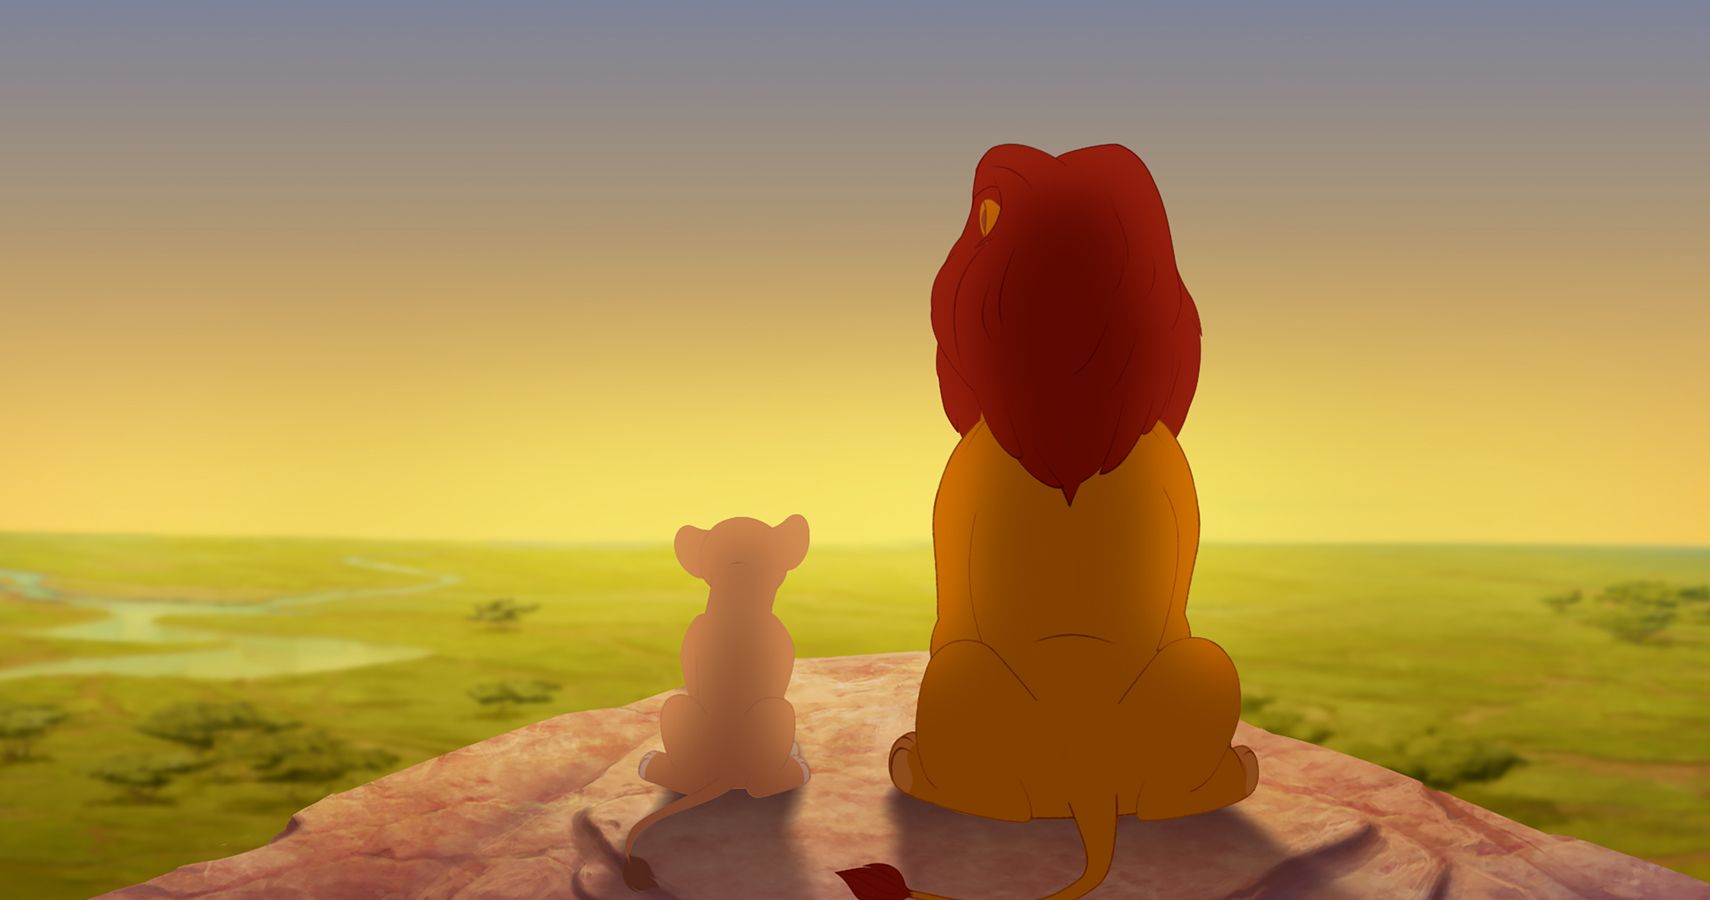 Ranked: The Most Heartbreaking Disney Films